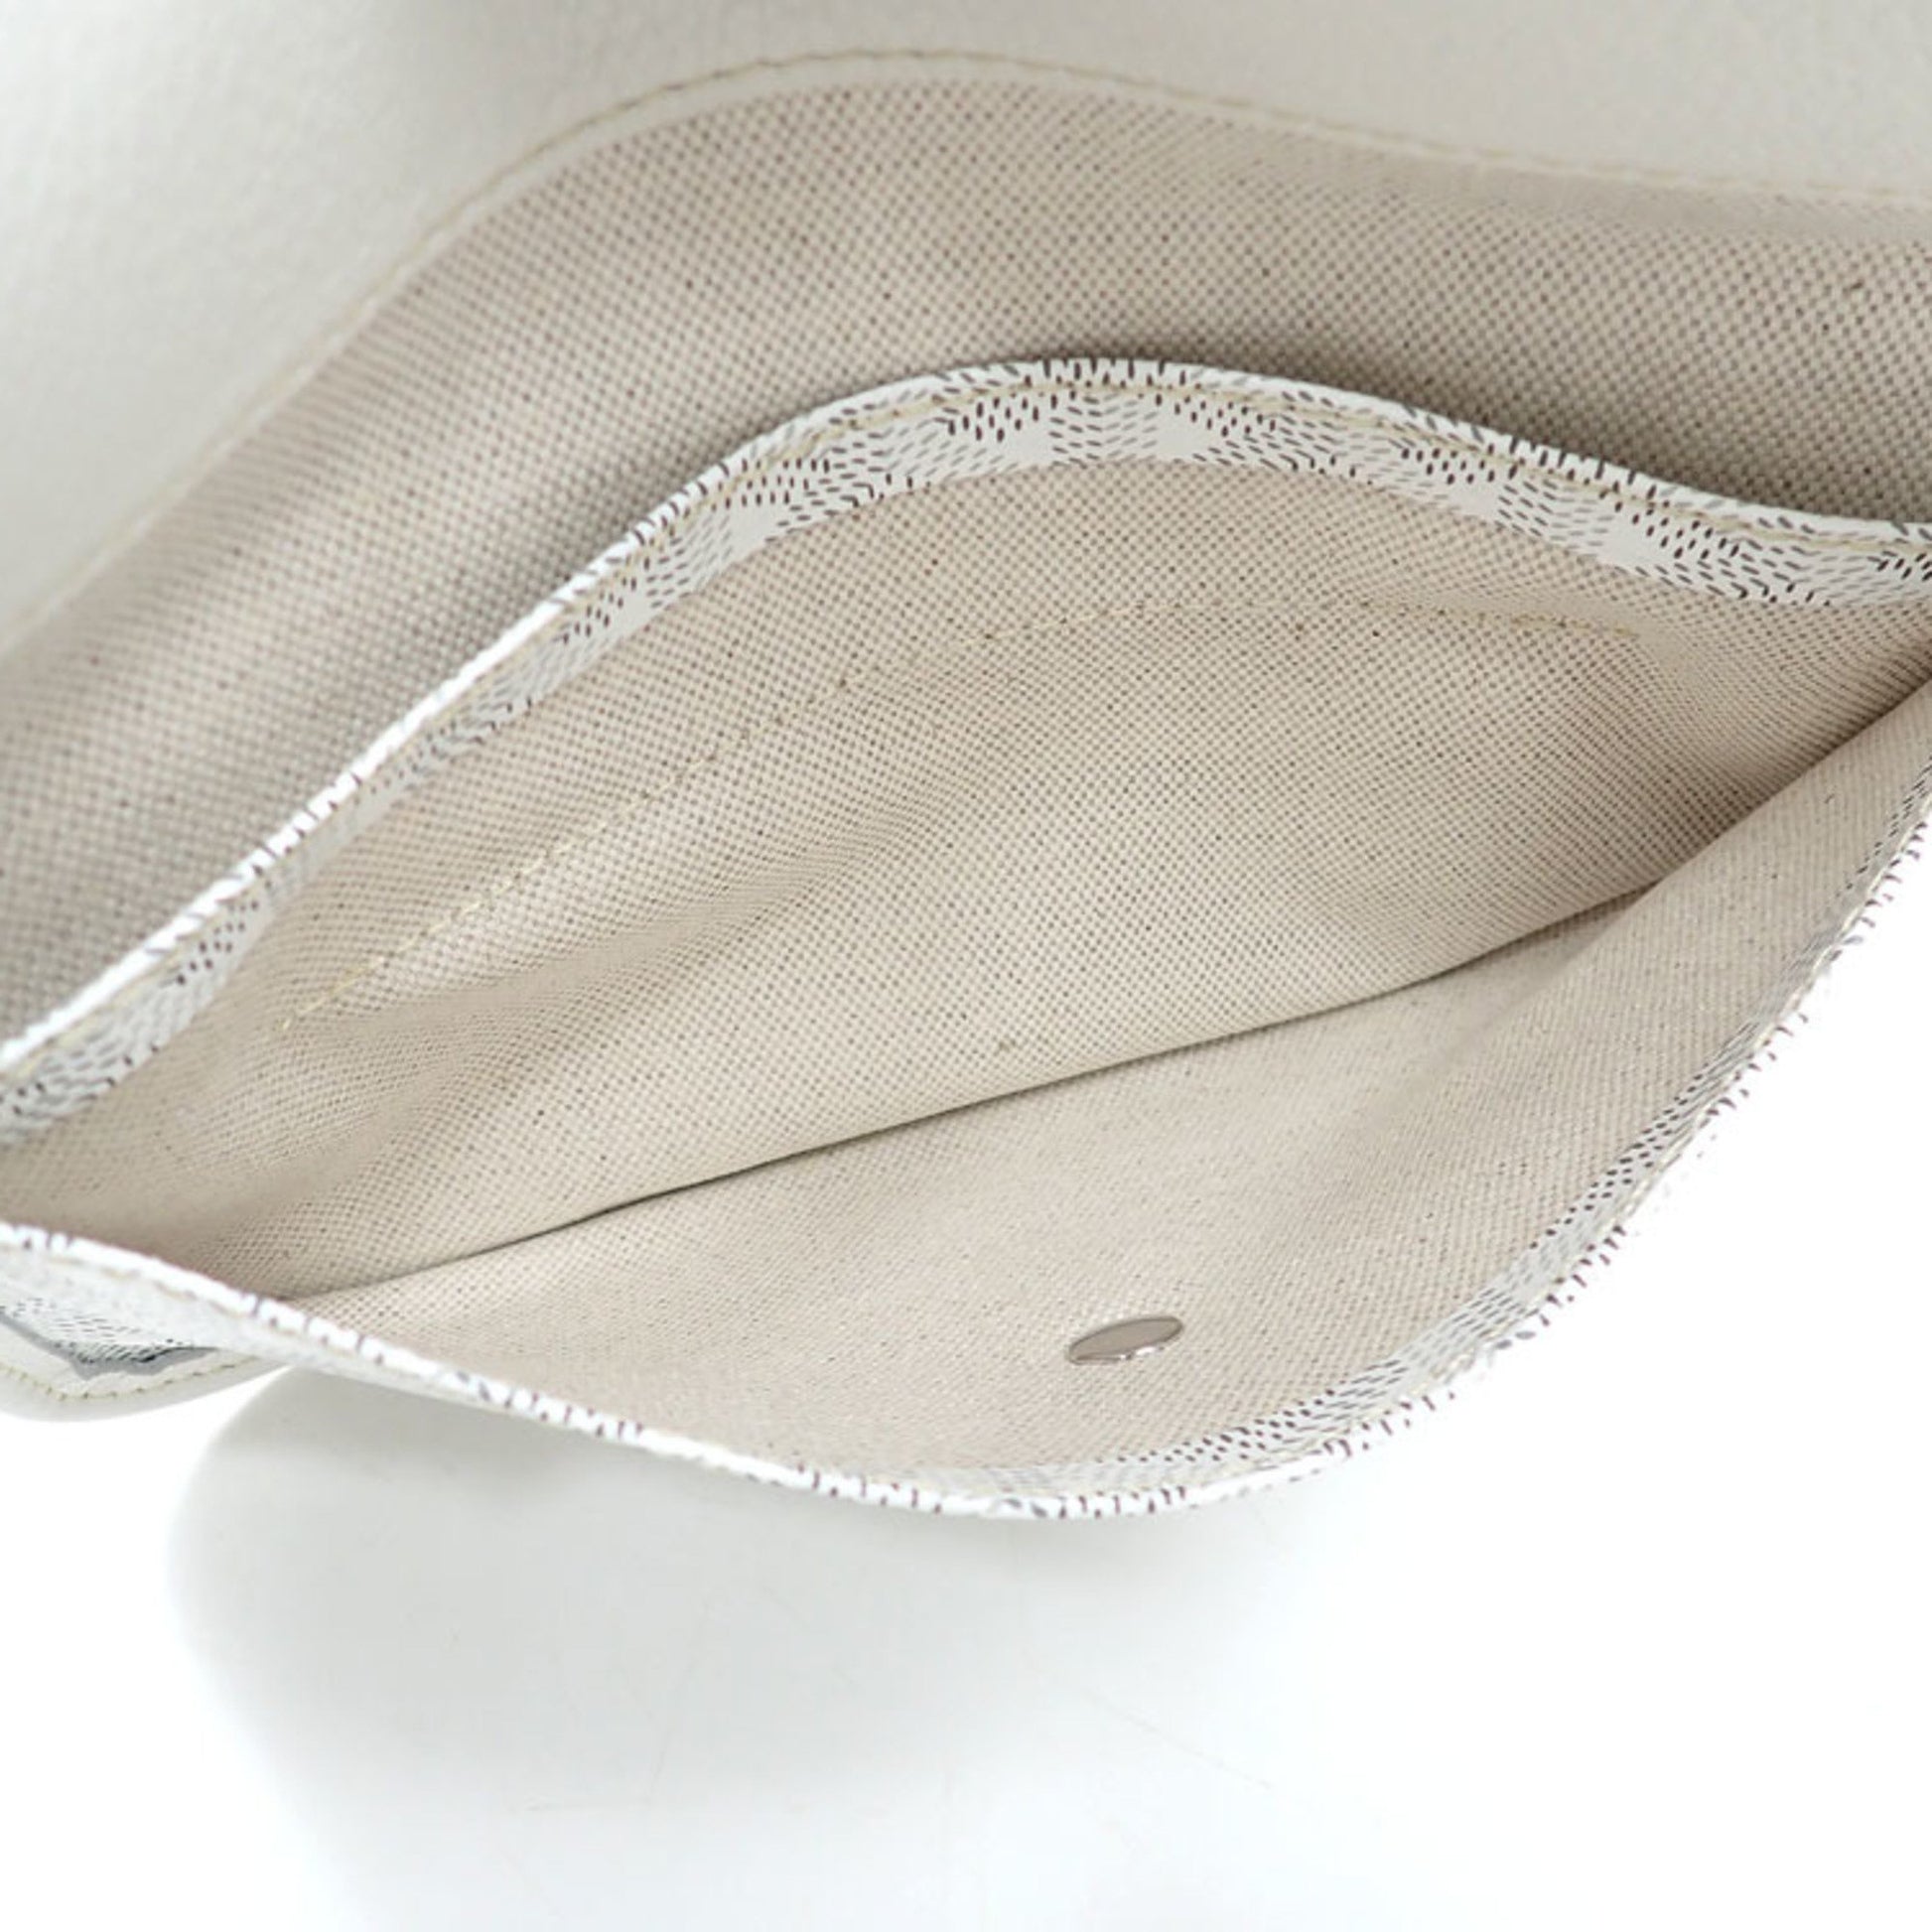 Goyard Saint Louis PM white PVC leather 26 x 47 x 14 cm pouch A4 size  available